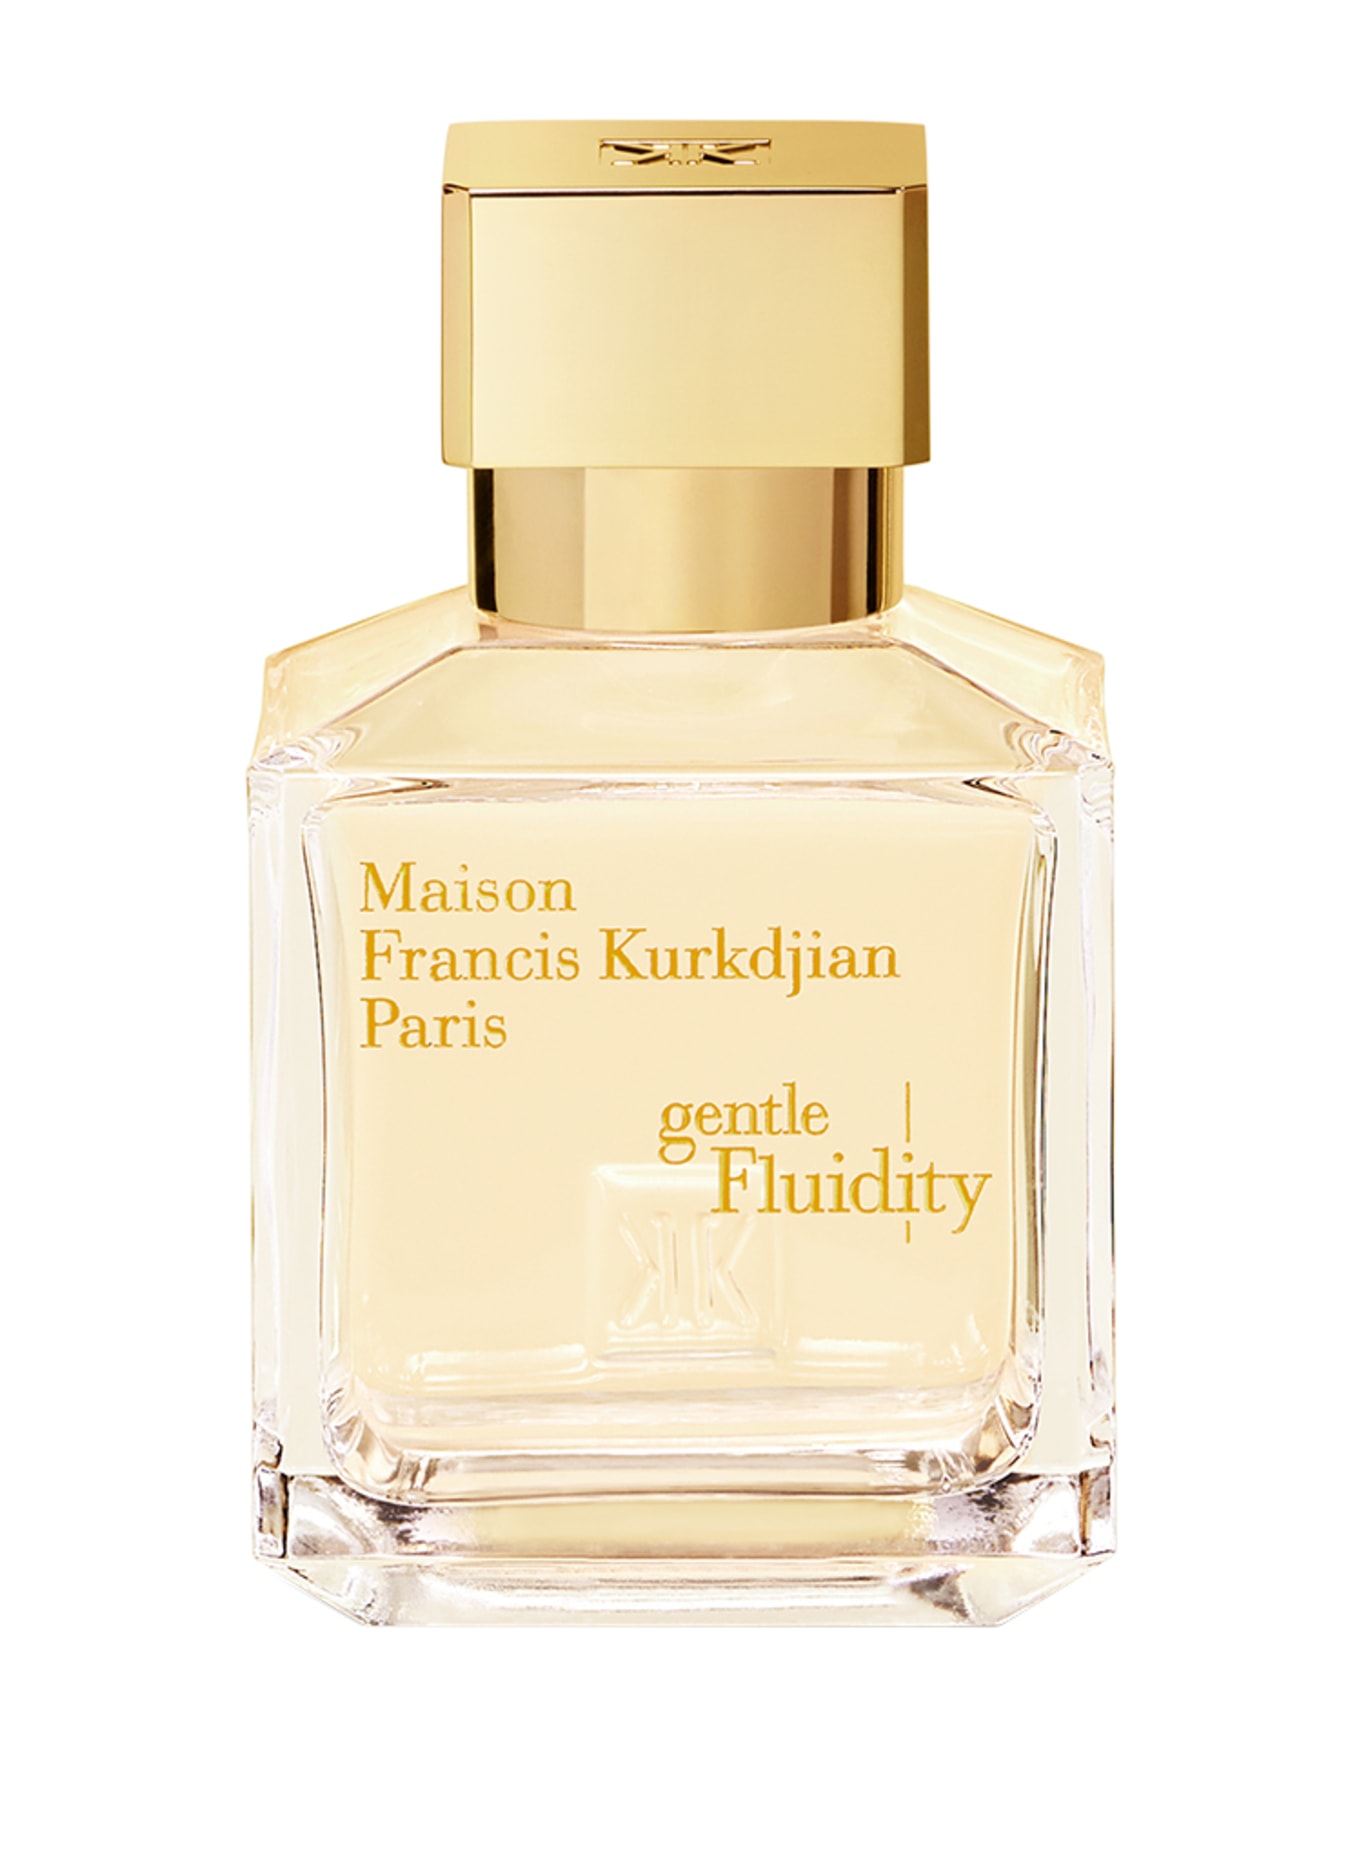 Maison Francis Kurkdjian Paris GENTLE FLUIDITY GOLD(Bild null)